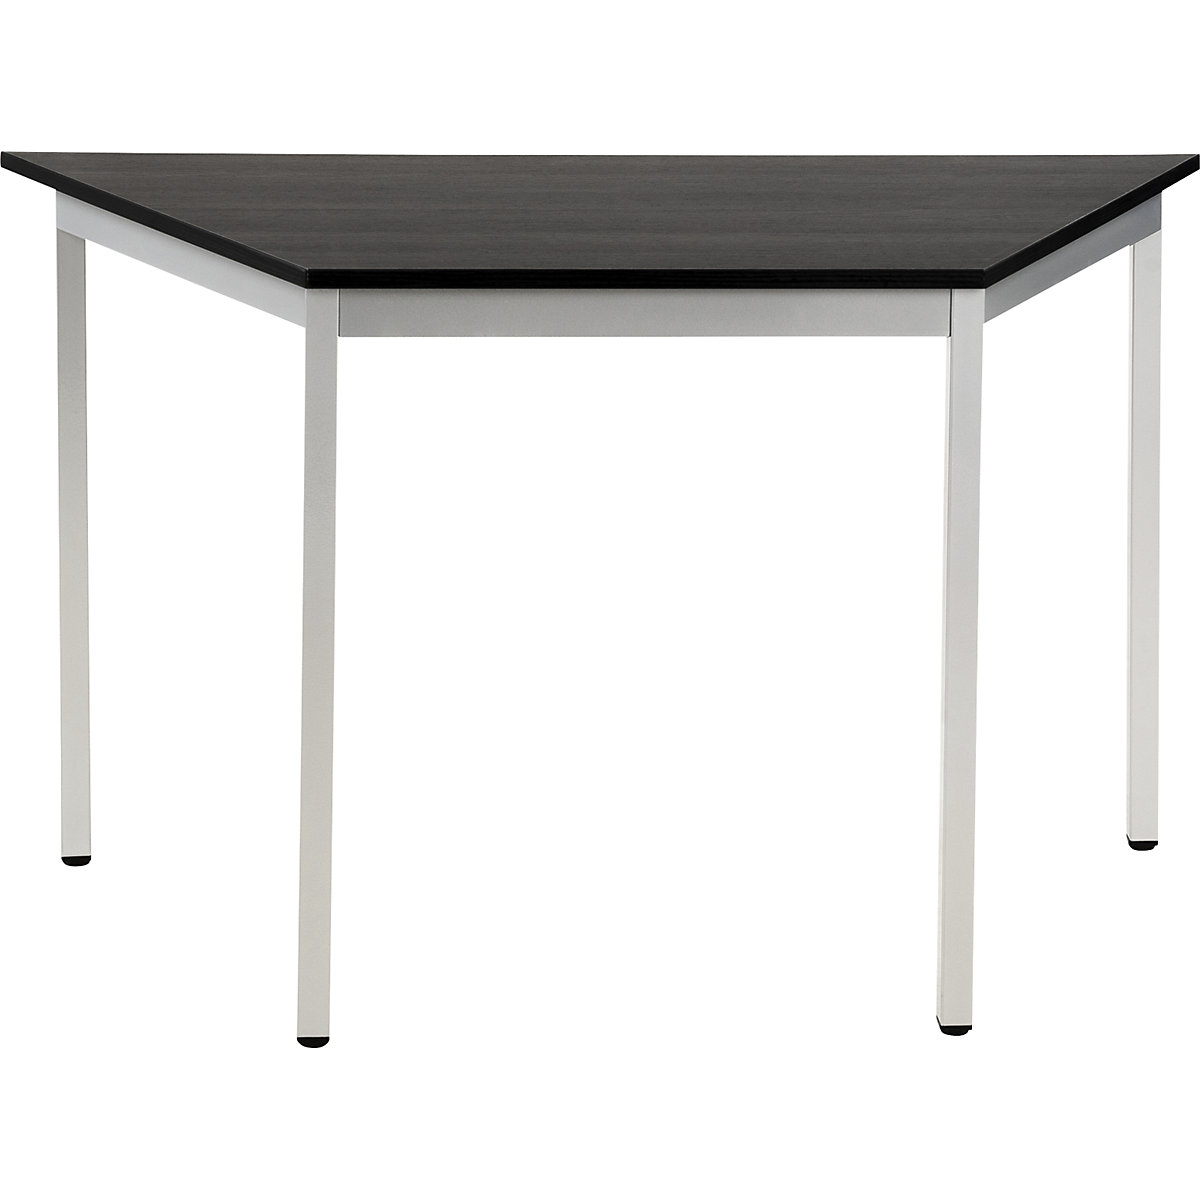 Multipurpose table – eurokraft basic, trapezoidal, HxWxD 740 x 1200 x 600 mm, ash finish tabletop in dark grey, white aluminium frame-18